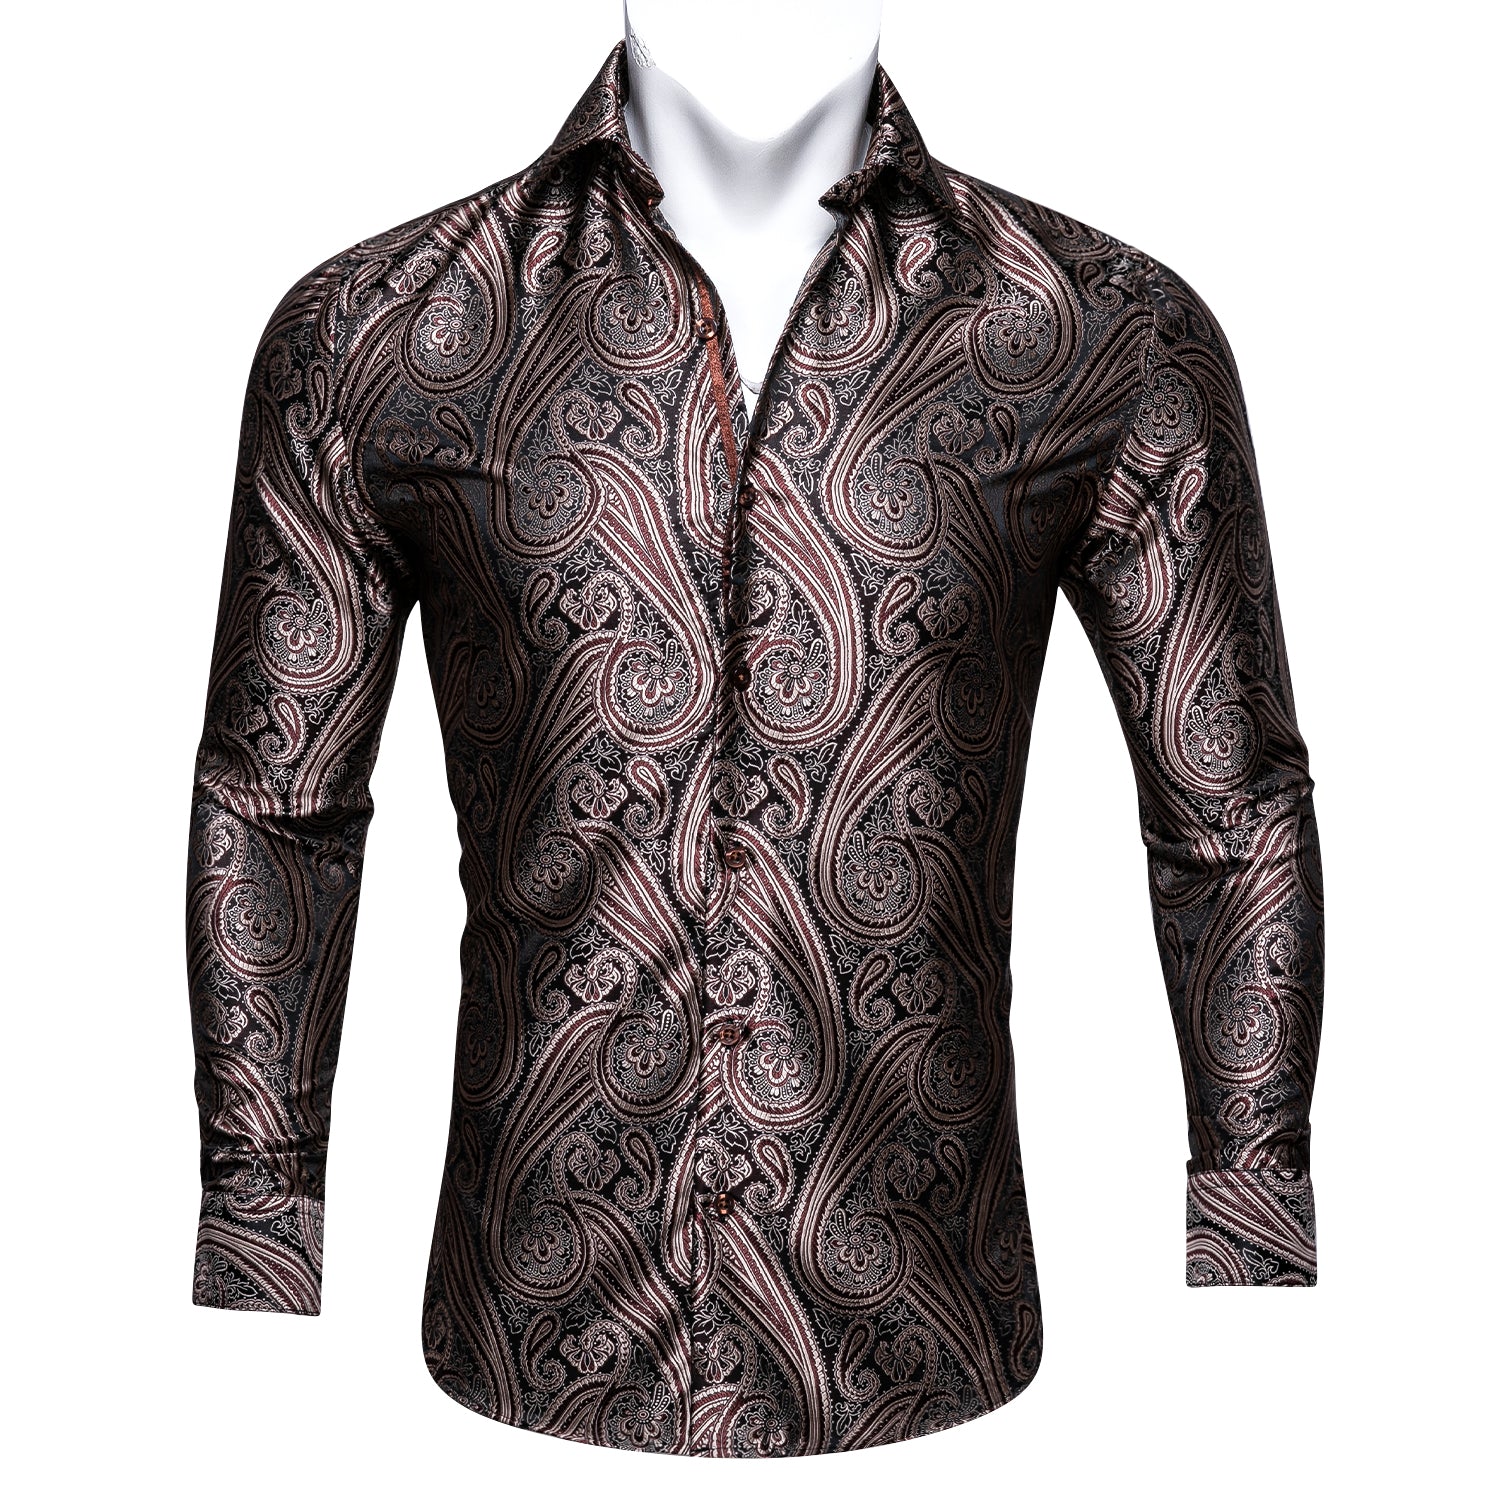 Barry.wang New Brown Black Silk Paisley Tribal Long Sleeve Daily Tops Men's Shirt